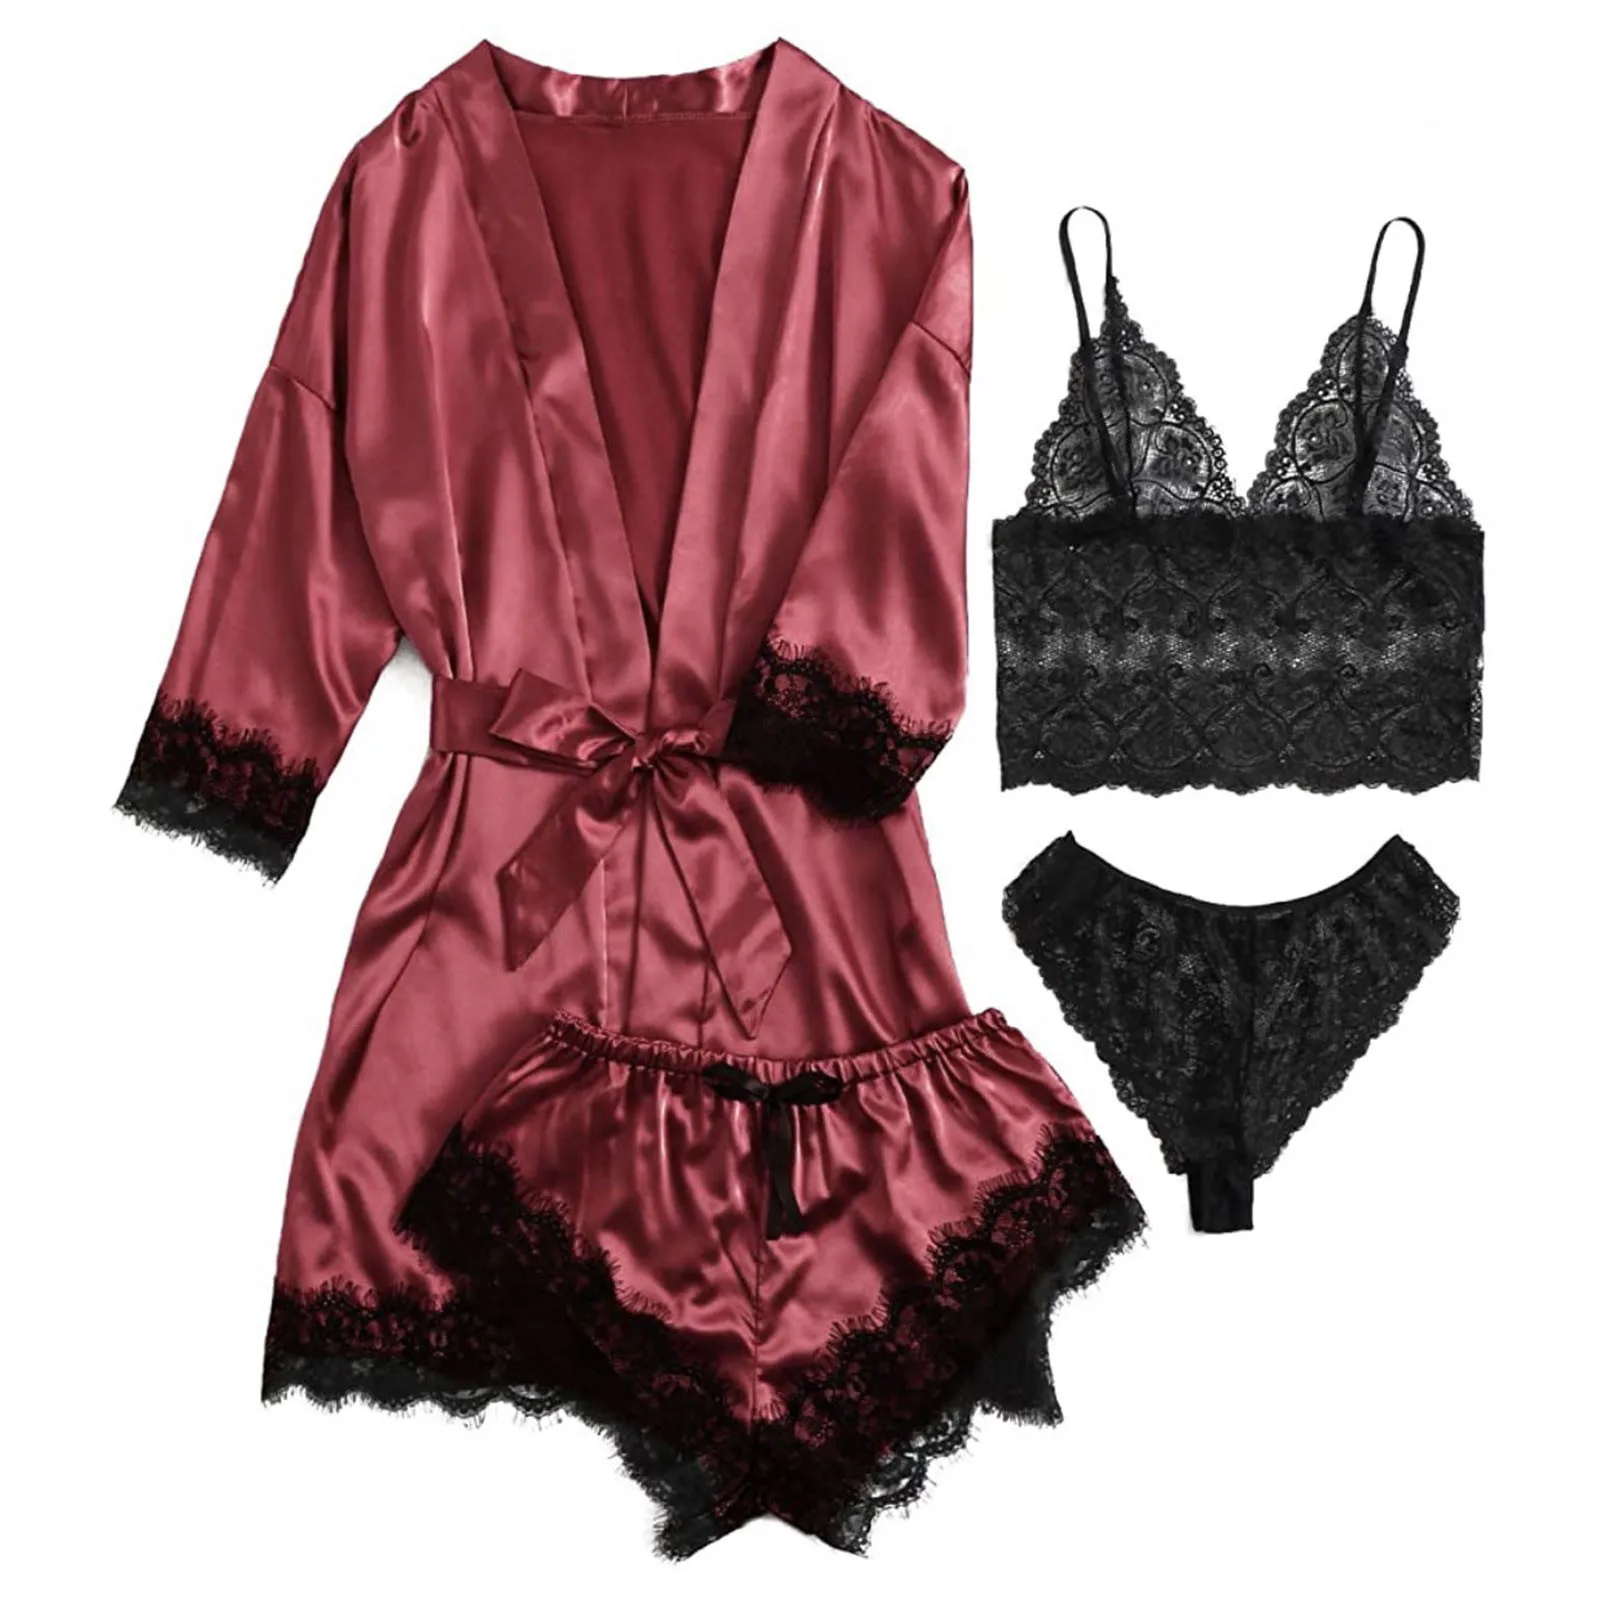 Women' Silk Satin Pajamas Set 4pcs Lingerie Floral Lace Sleepwear With Robe Nightgown Long